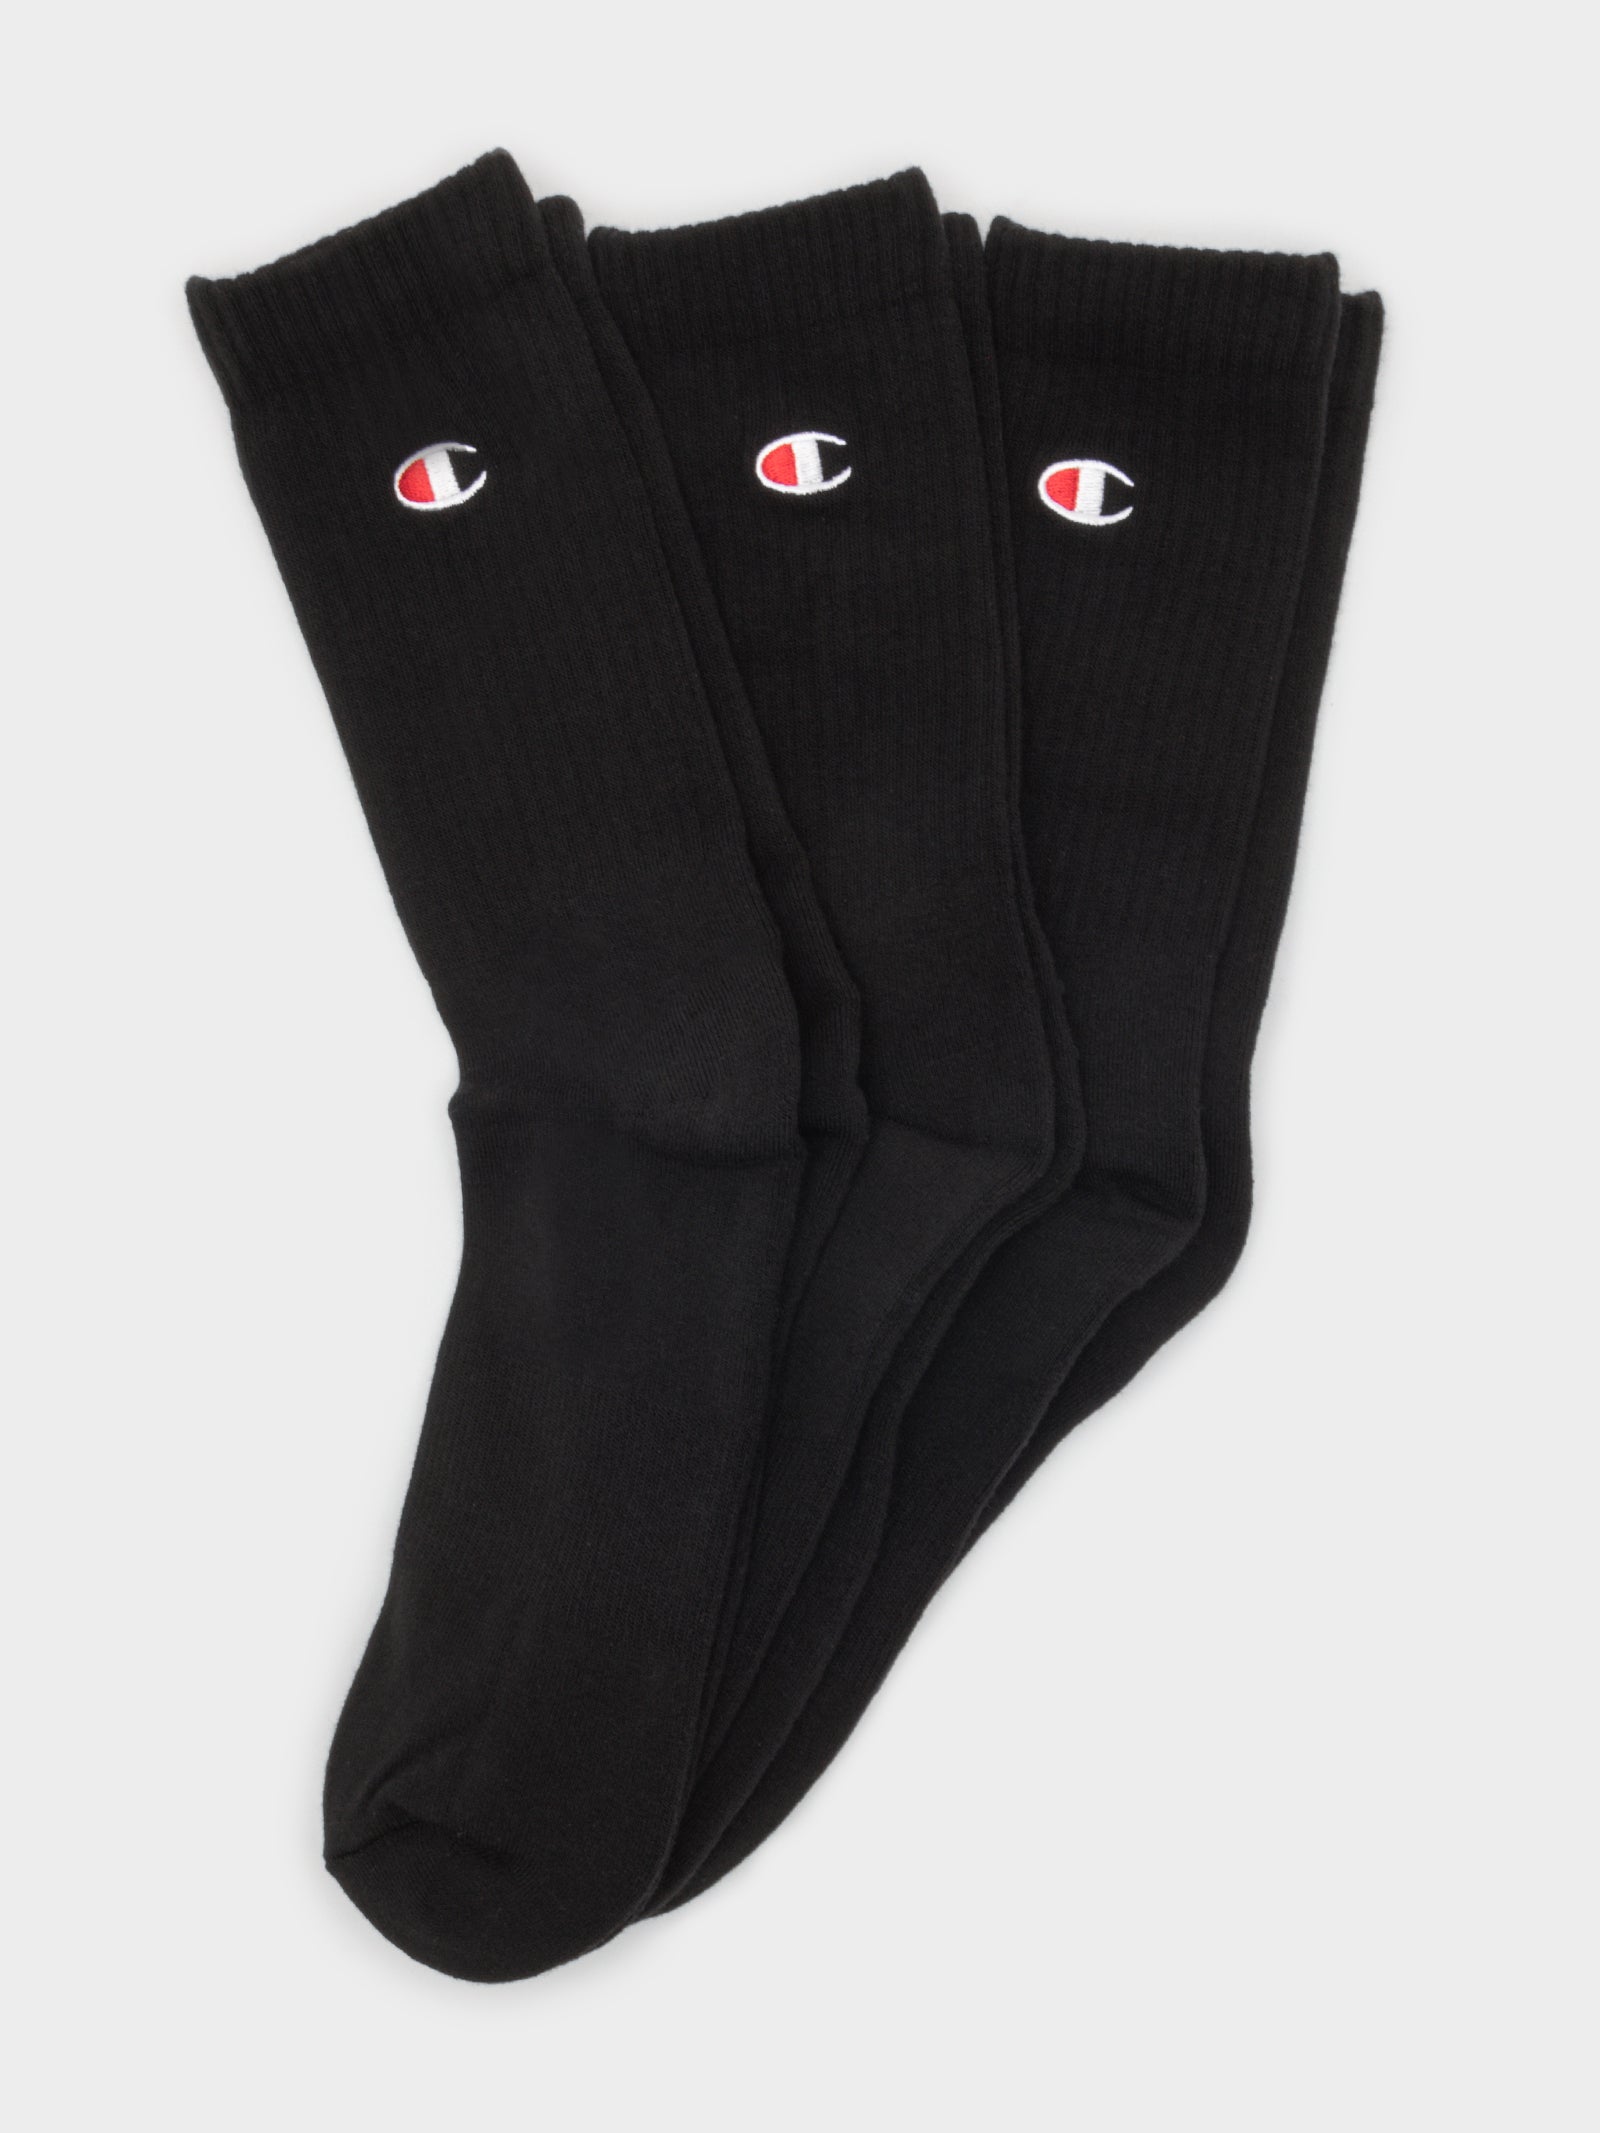 3 Pairs of Lifestyle C Logo Crew Socks in Black